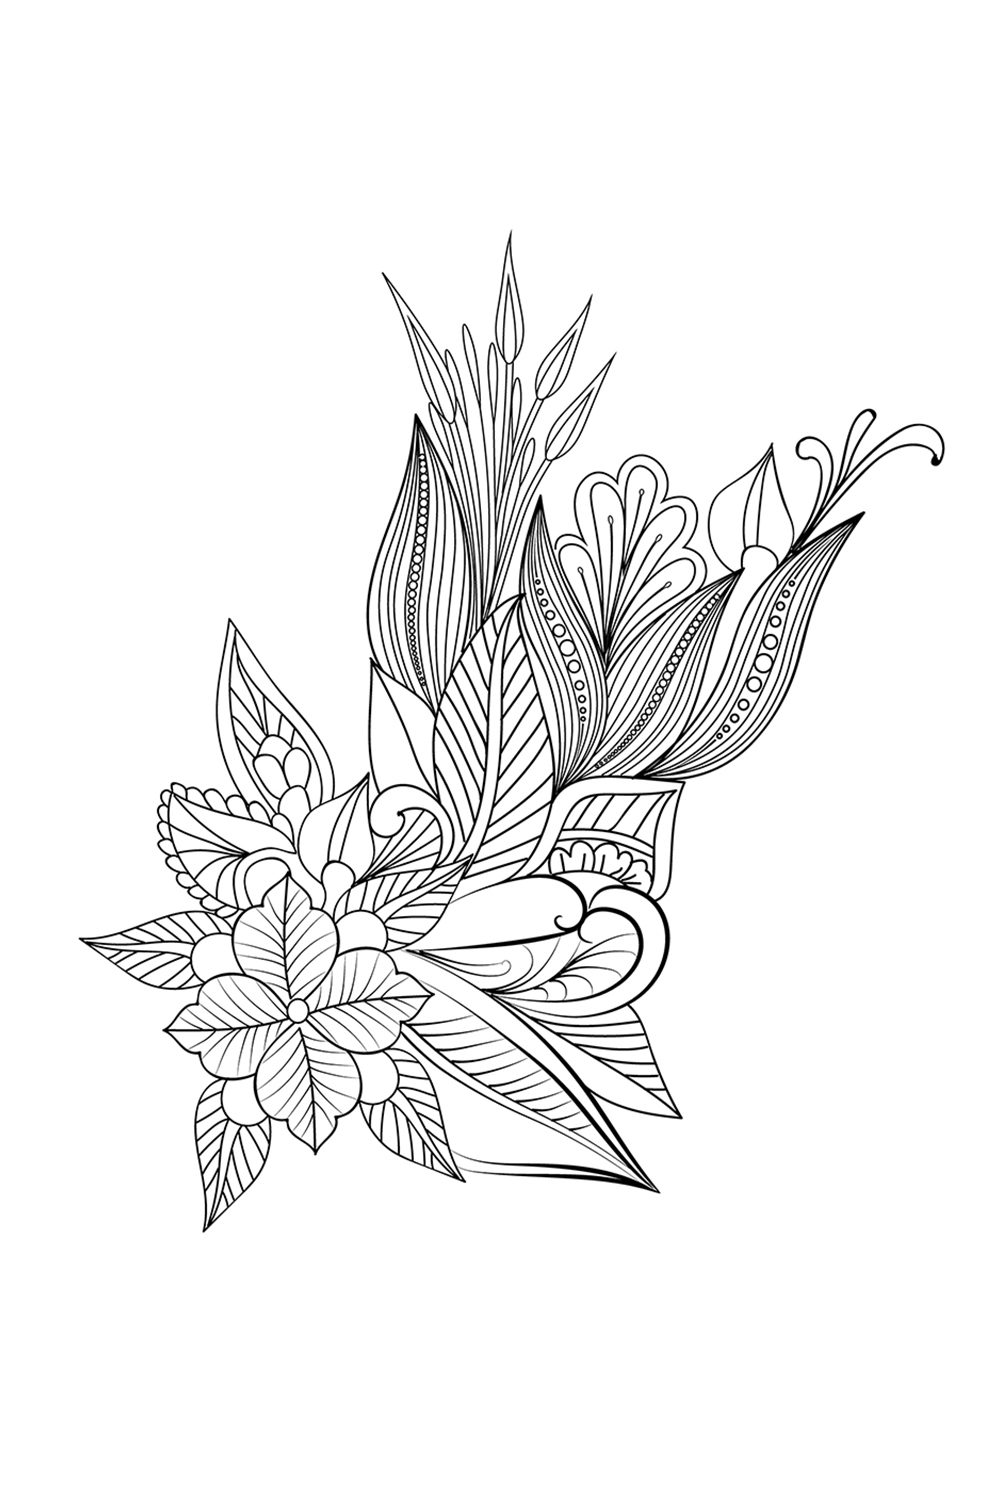 Doodle flower art, doodle flower art drawing, doodle flower drawing, flower drawing doodle art zentangle art, doodle flower coloring pages pinterest preview image.